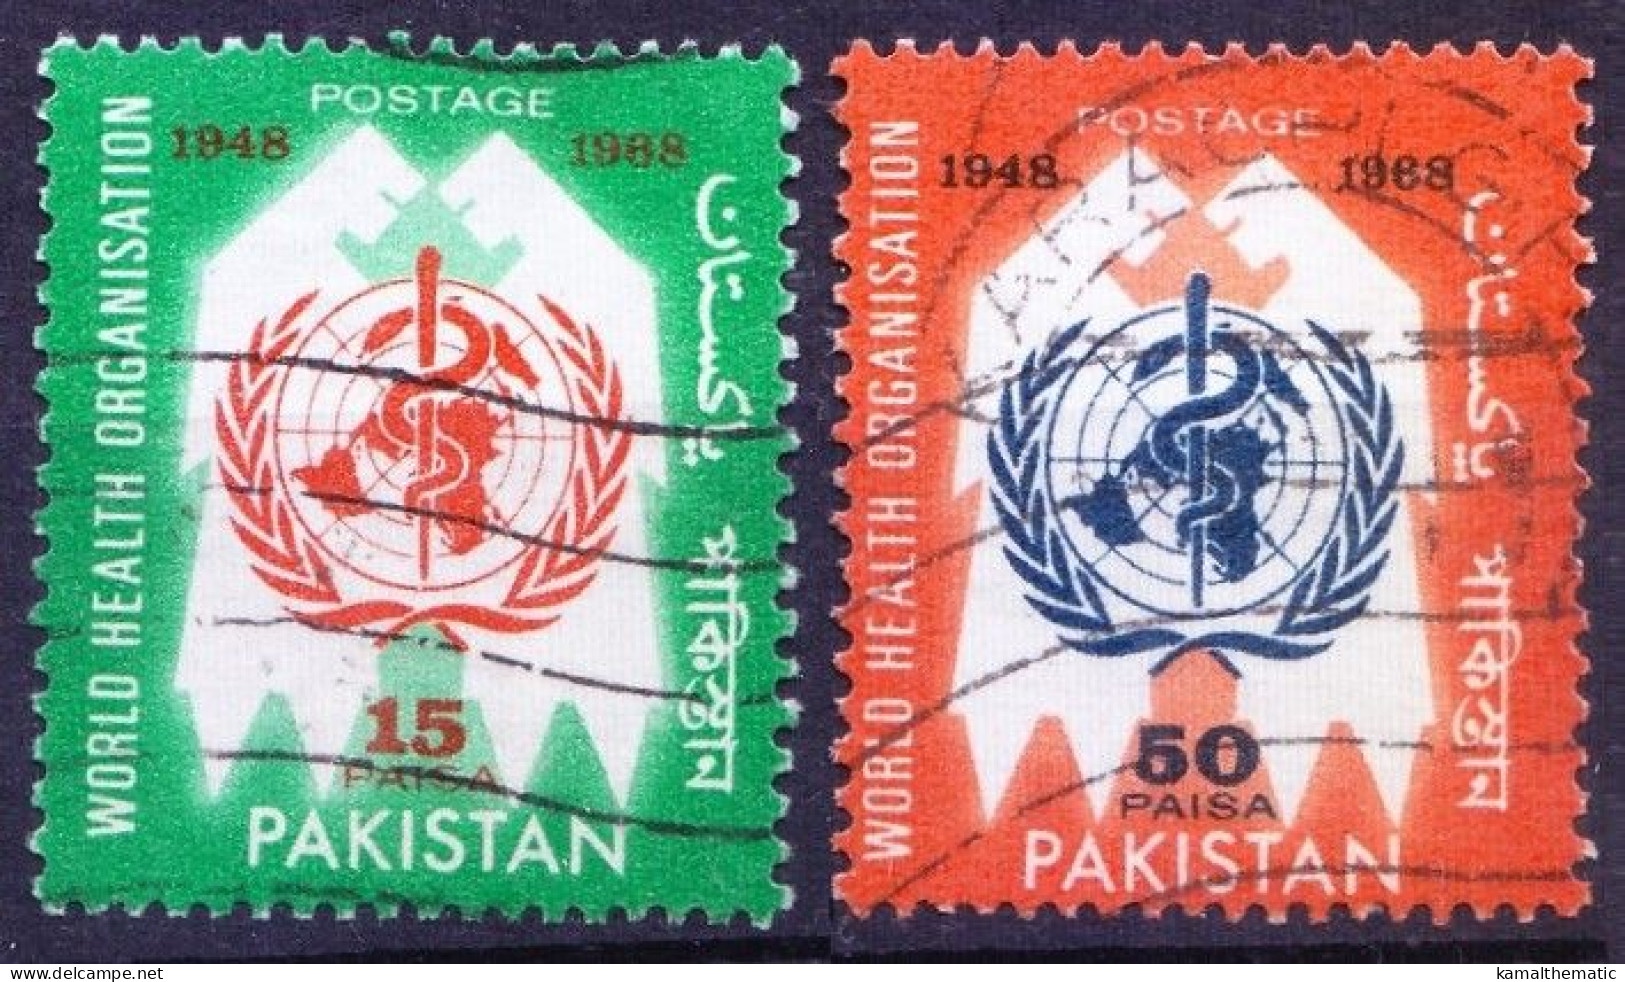 Pakistan 1968 Fine Used 2v, W.H.O. Emblem - WGO